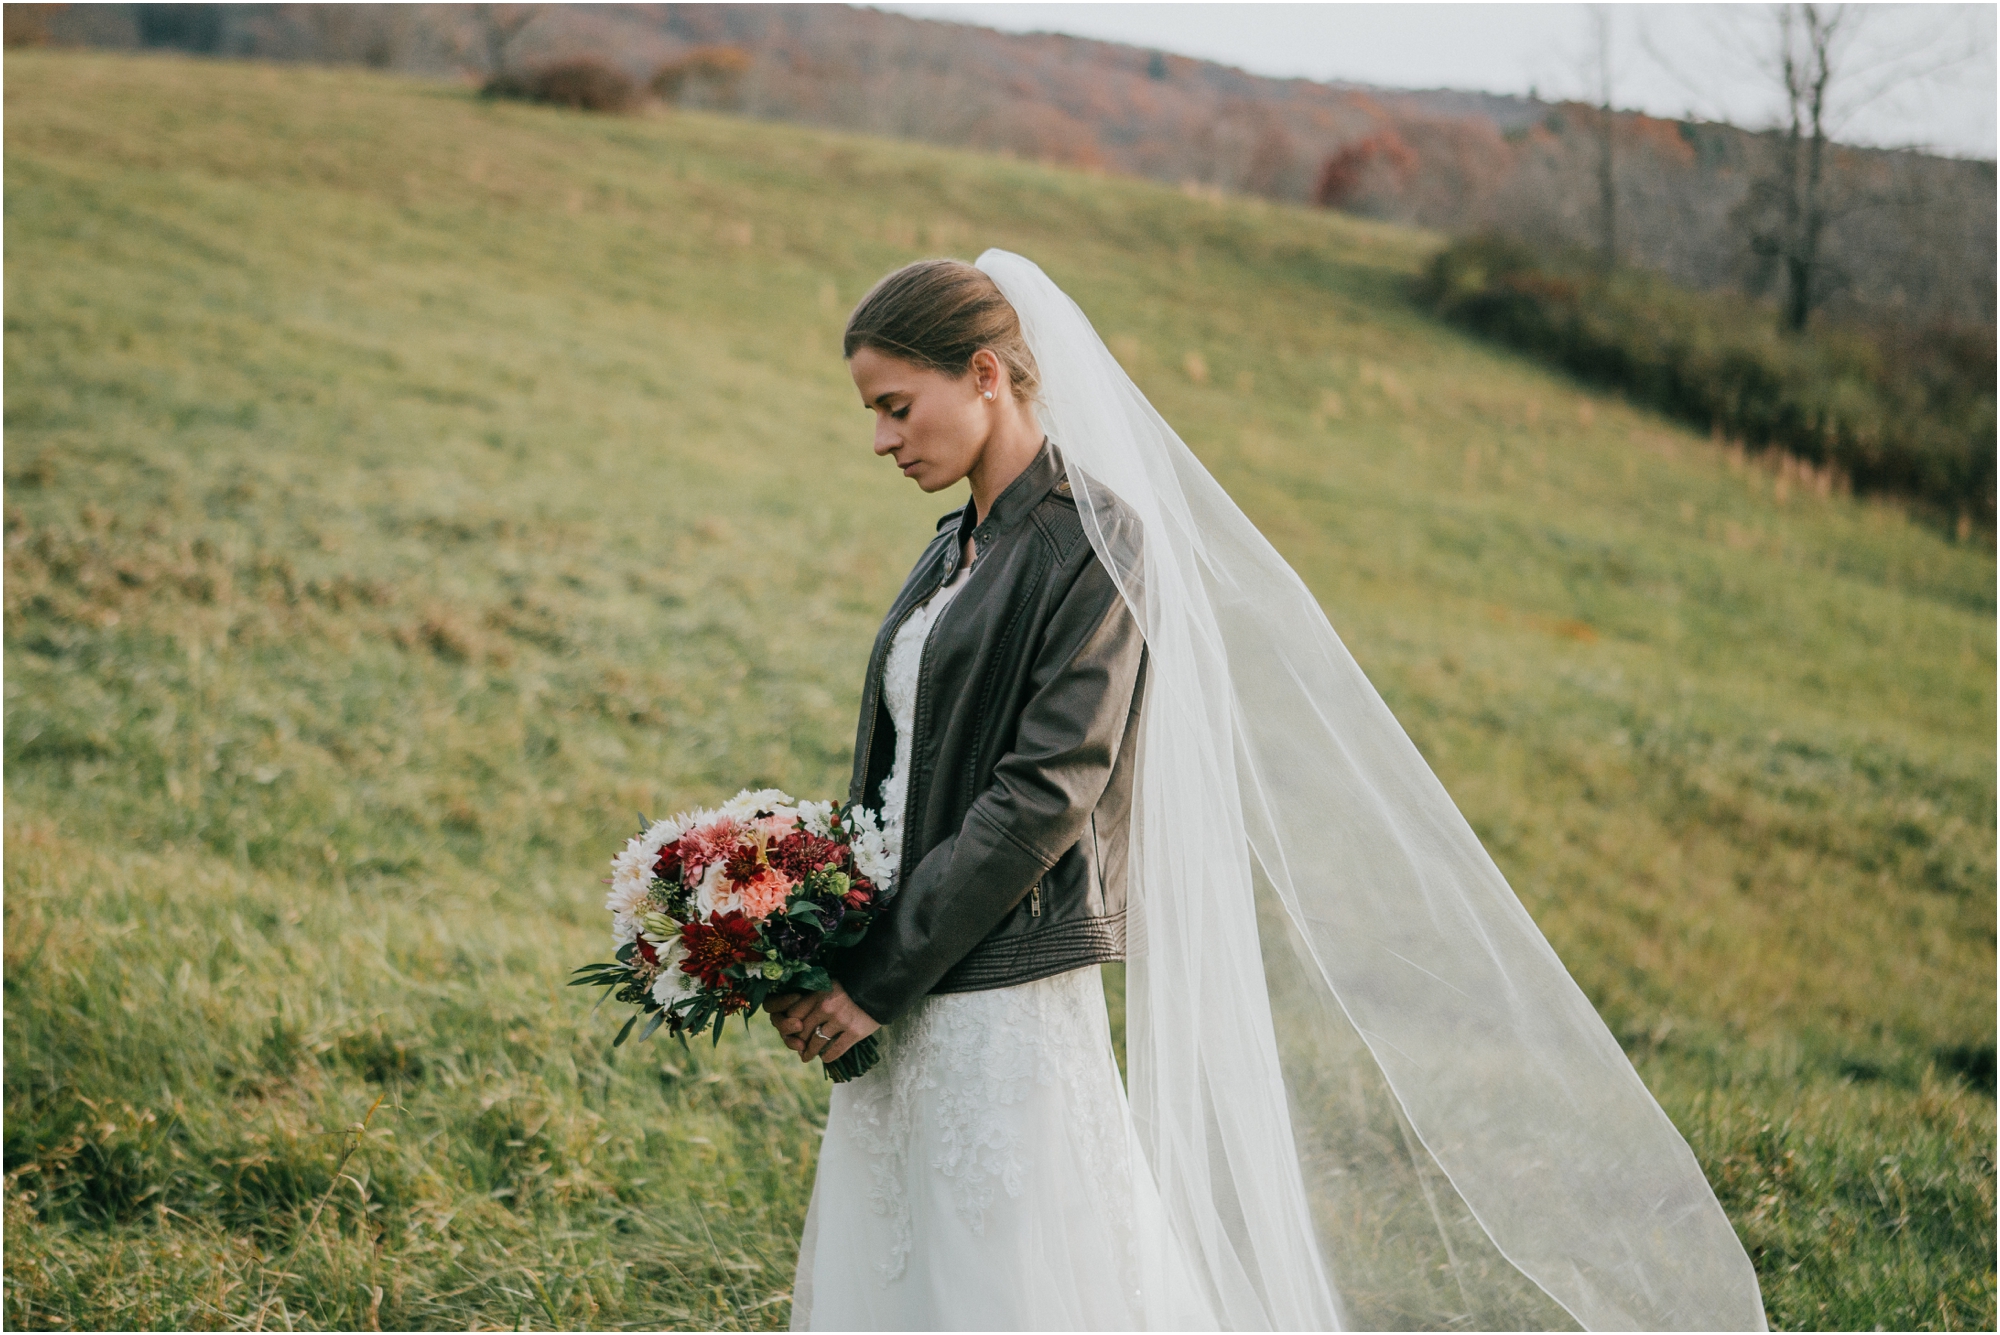 warm-springs-old-dairy-virginia-rustic-wedding-northeast-tennessee-elopement-adventuruous-photographer-katy-sergent_0057.jpg